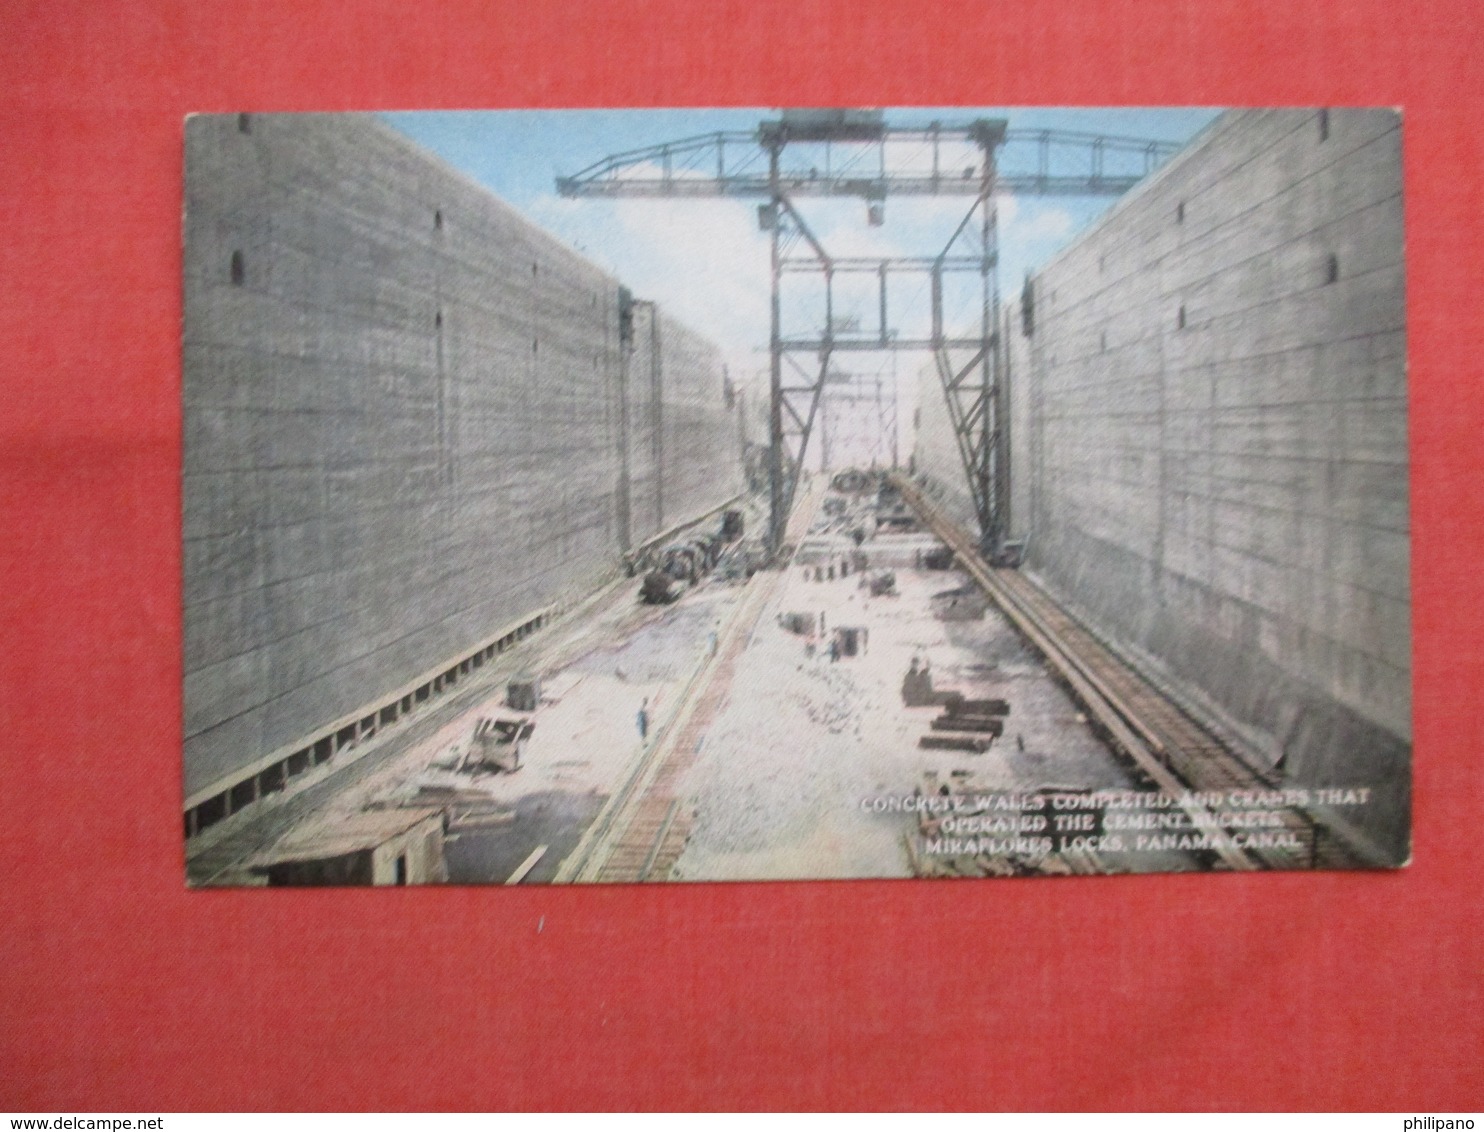 Concrete Walls & Lift Cranes Miraflores Locks   Panama Canal  Panama  Ref  3472 - Panama